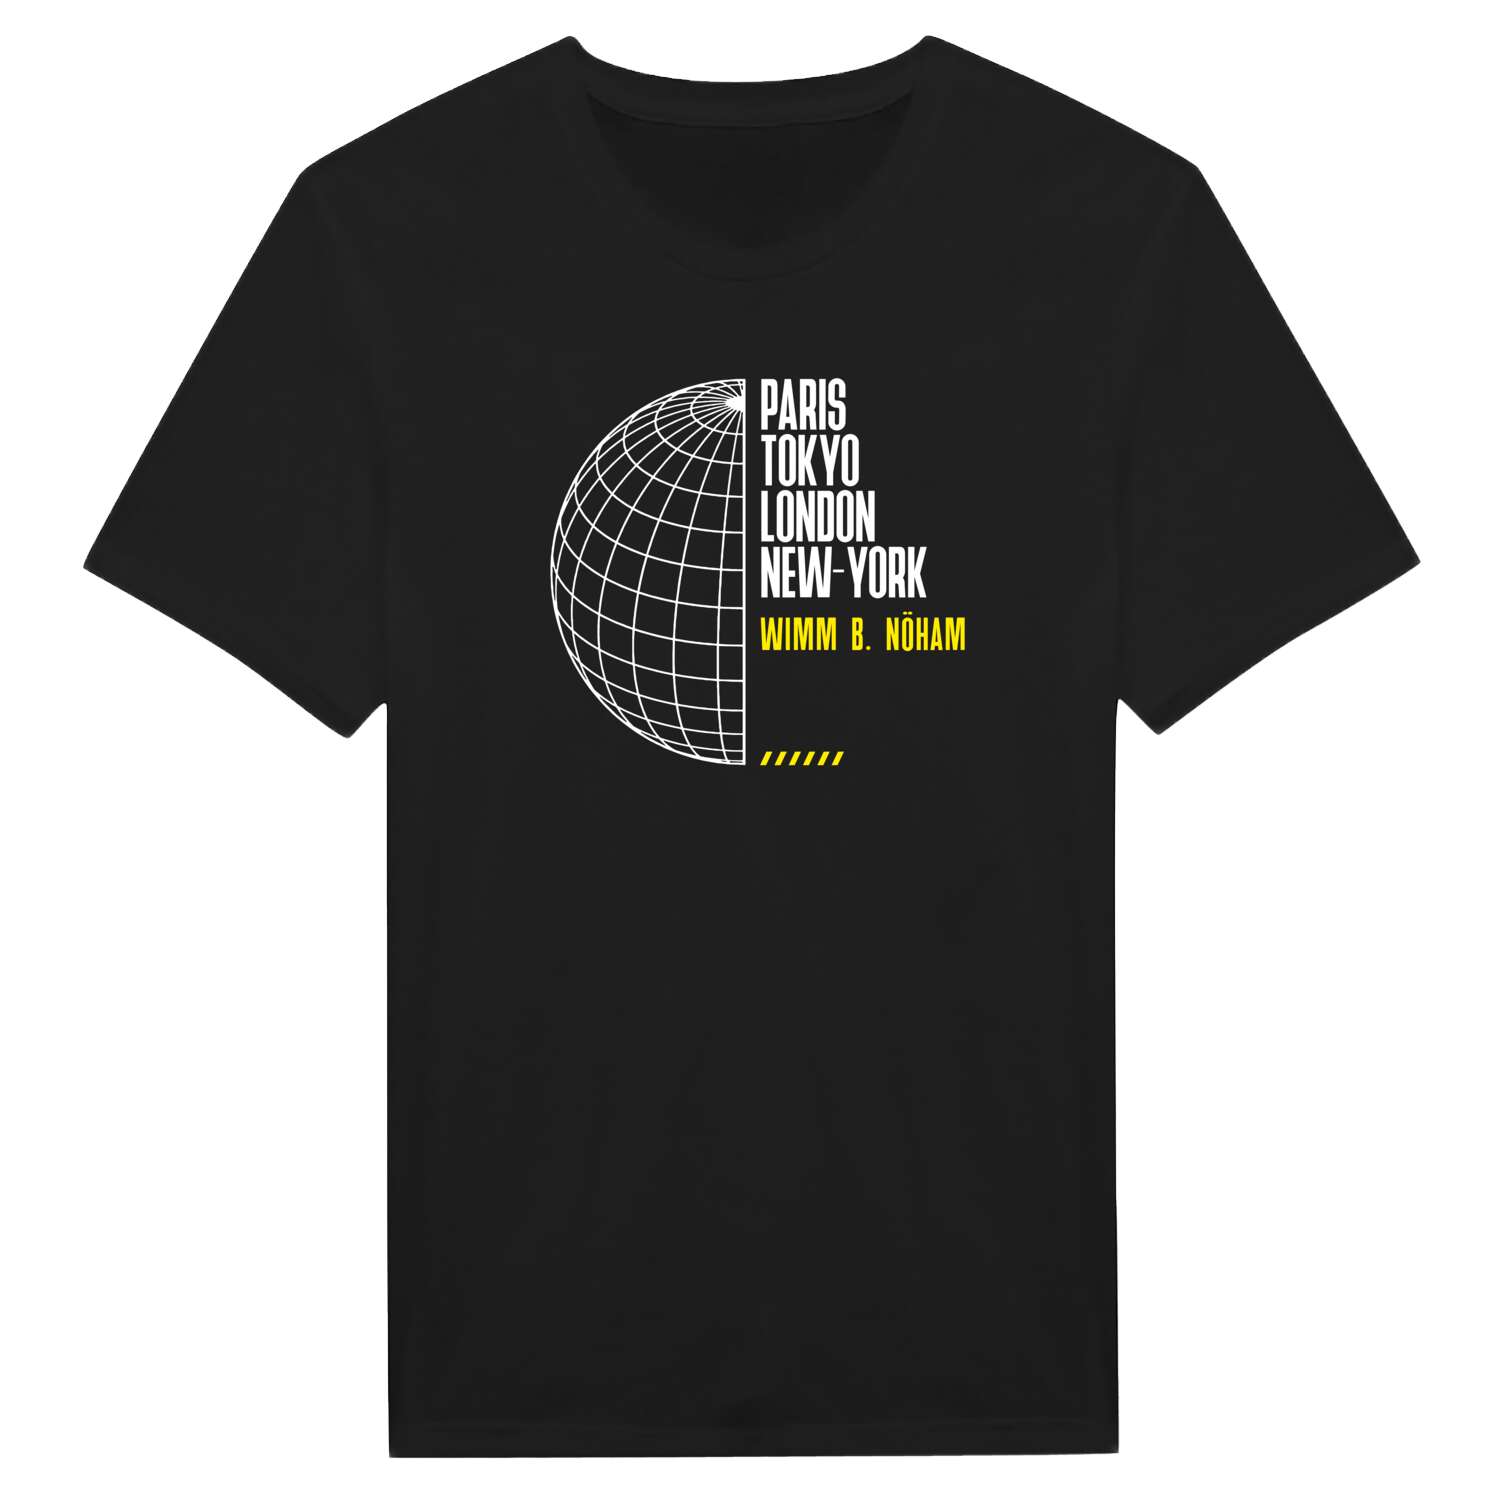 Wimm b. Nöham T-Shirt »Paris Tokyo London«